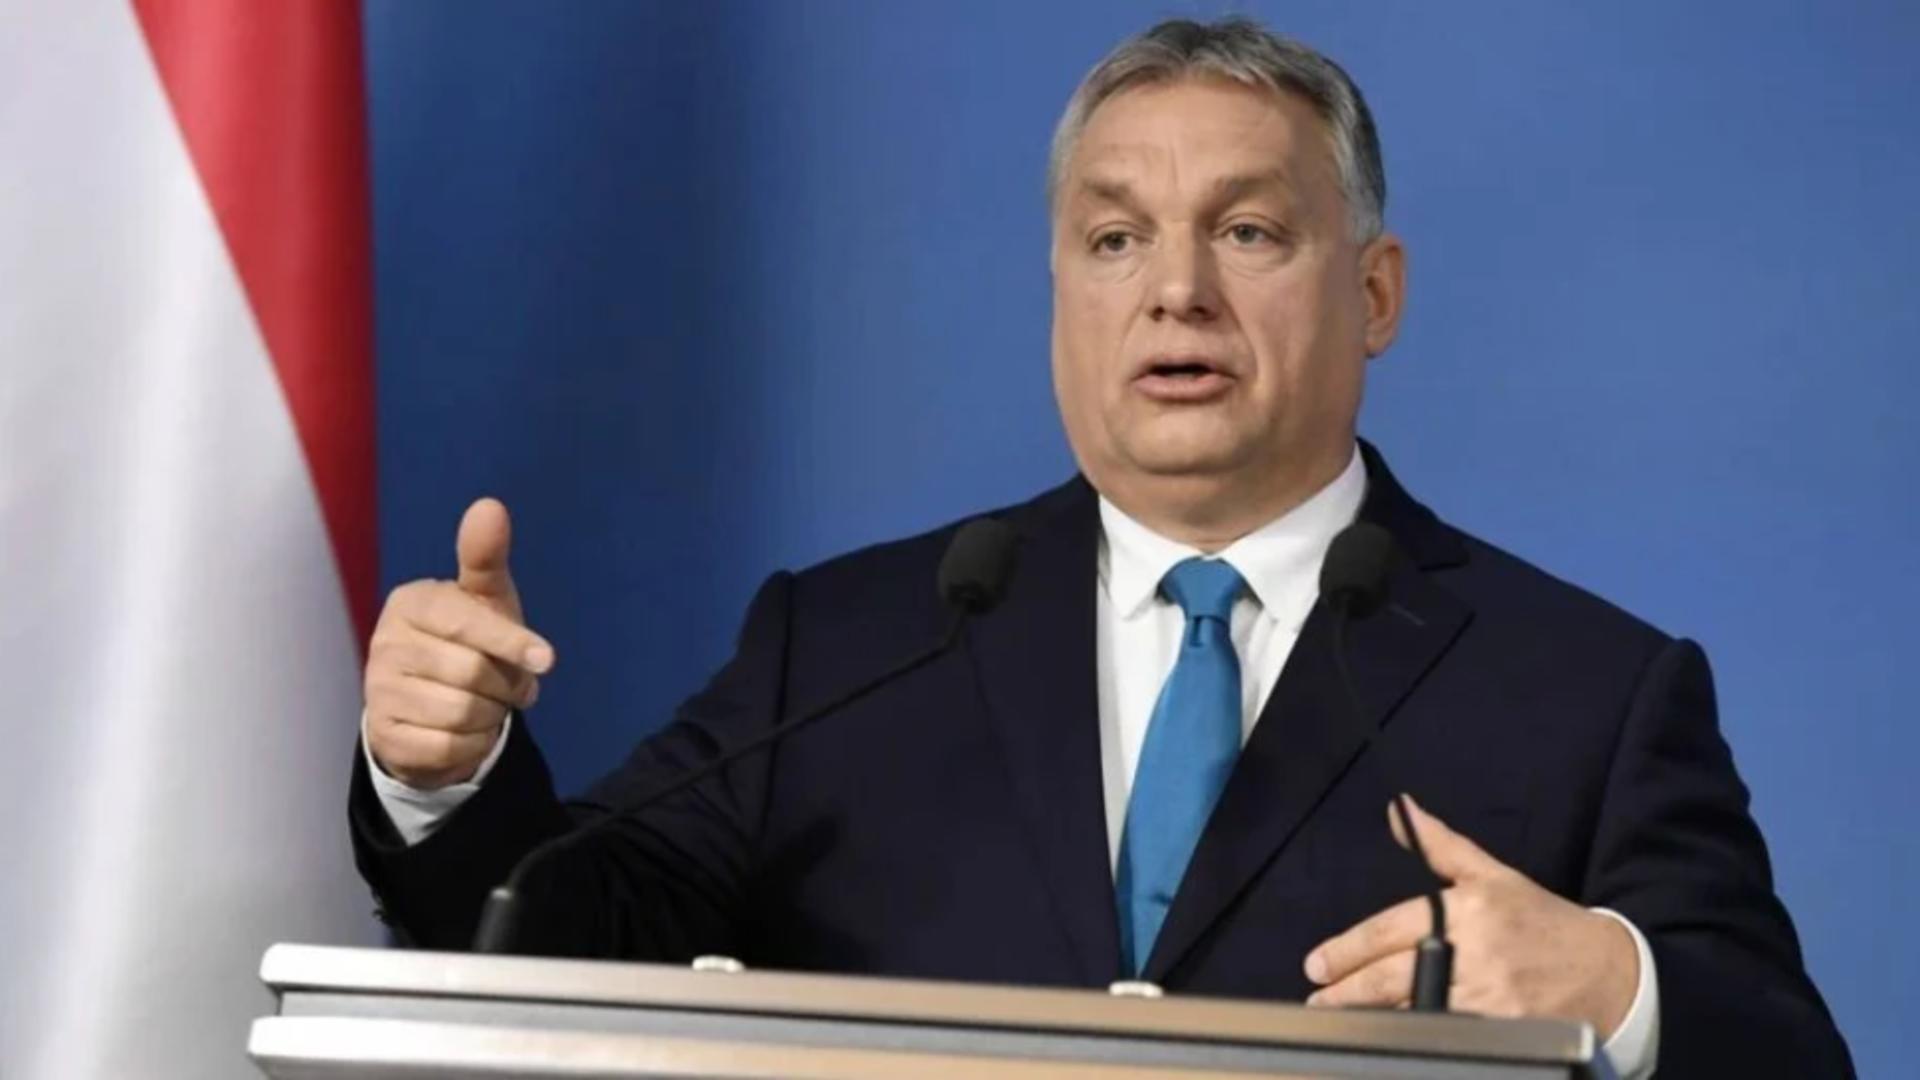 Viktor Orban, premierul Ungariei